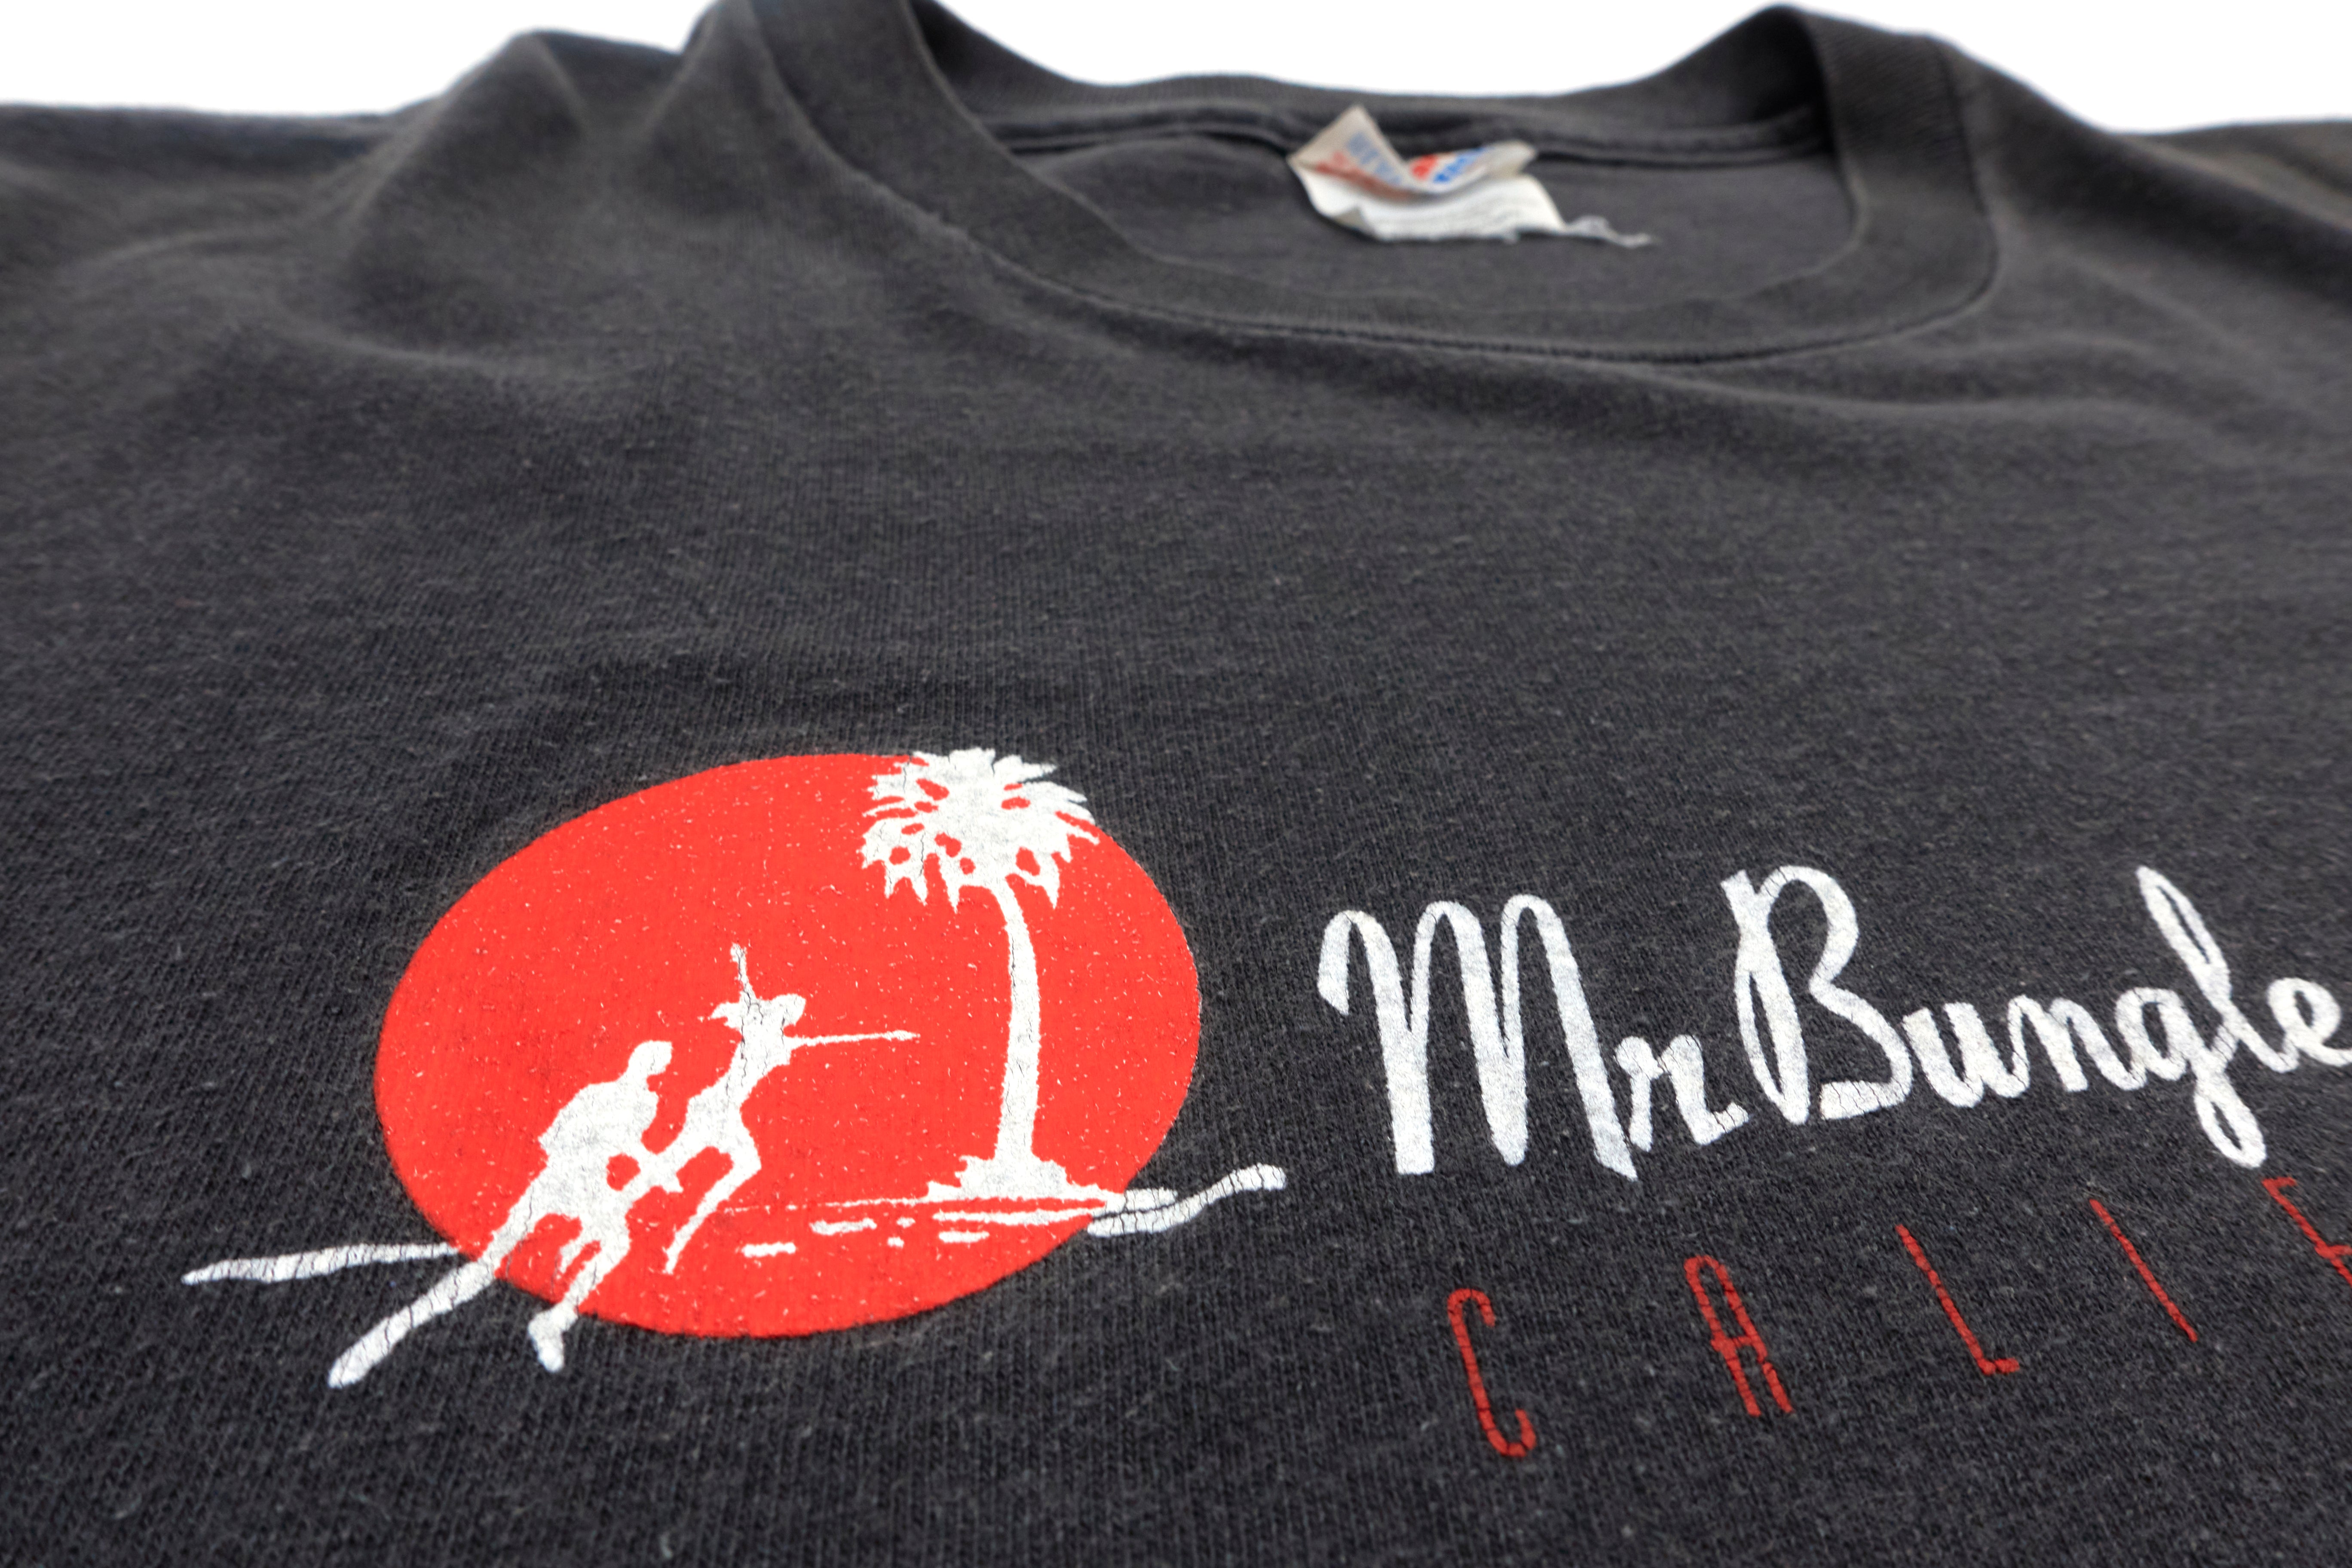 Mr. Bungle - California 1999 Tour Issue Shirt Size XL